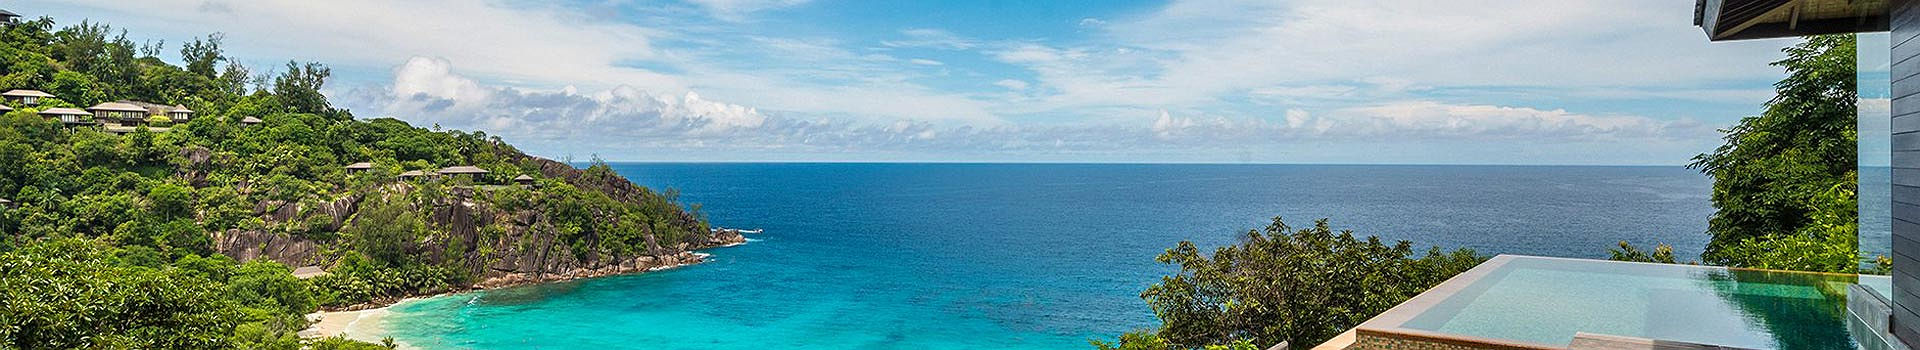 pano-four-season-resort-seychelles